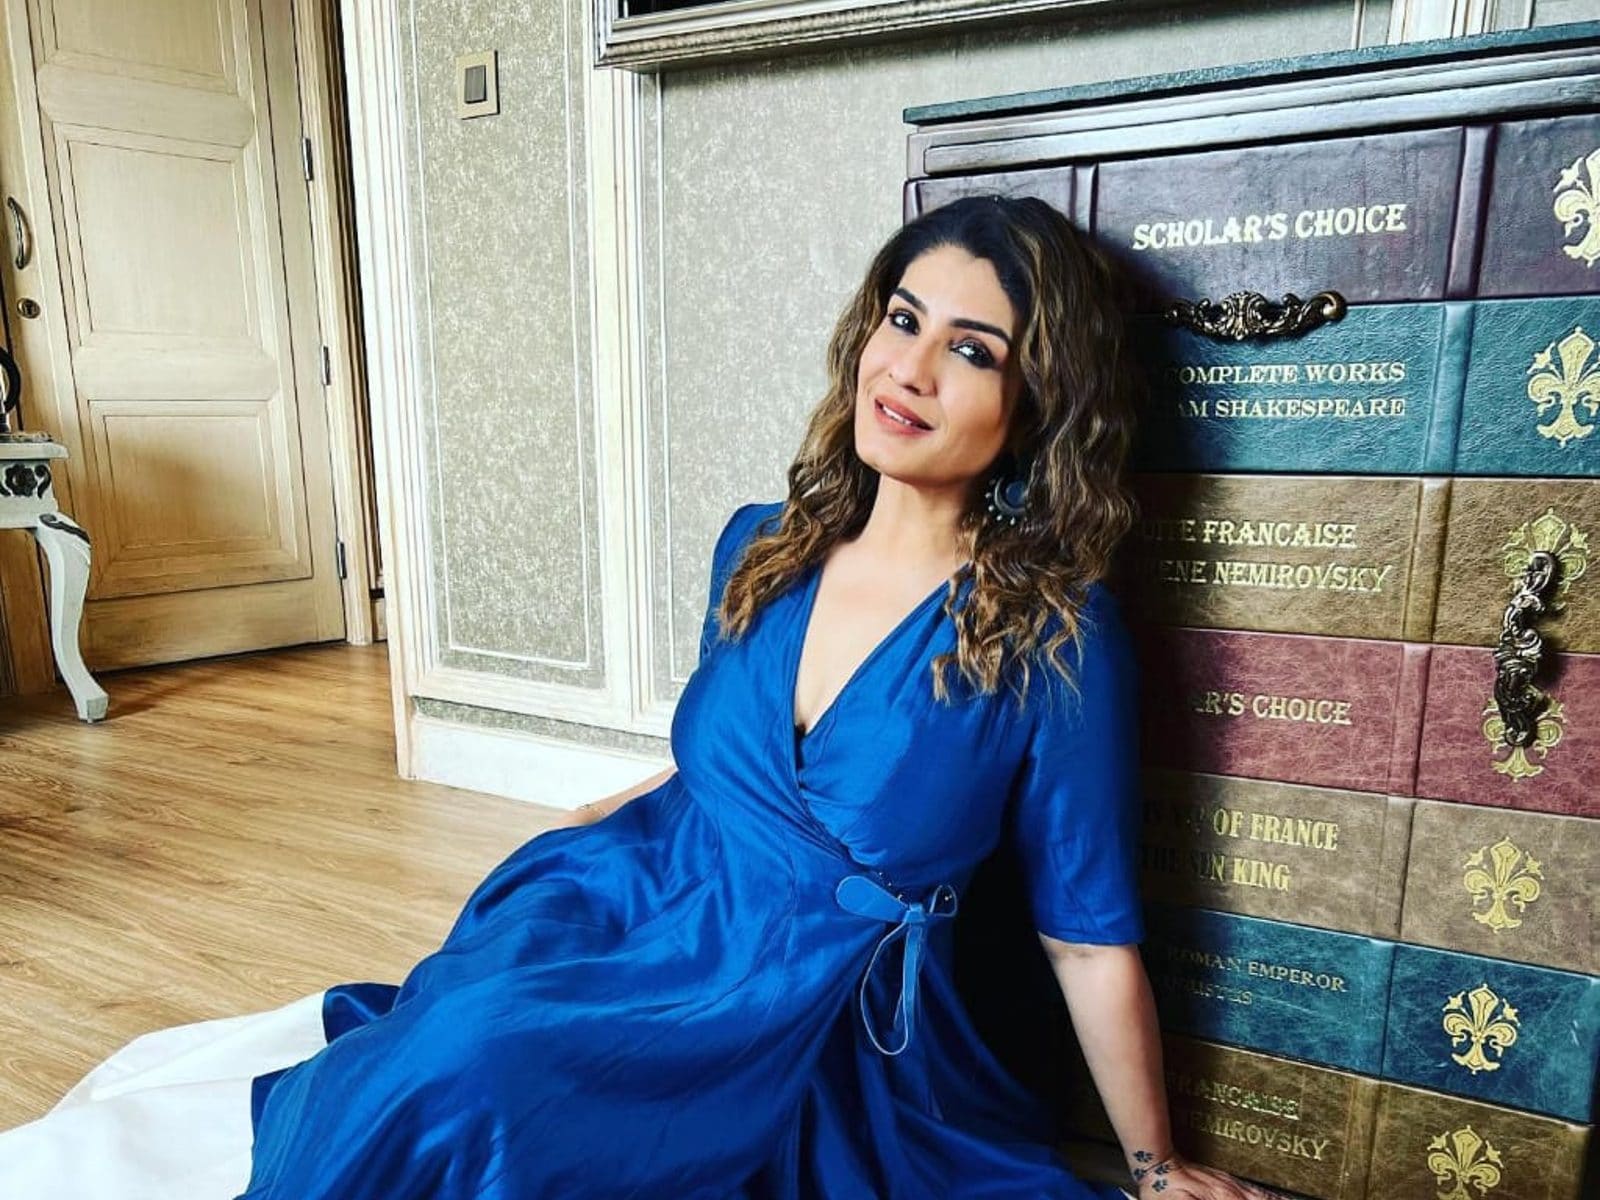 Raveena Tandonxxxx - With Her Gorgeous Dress, Raveena Tandon Is Blazing Blues on Instagram. -  News18